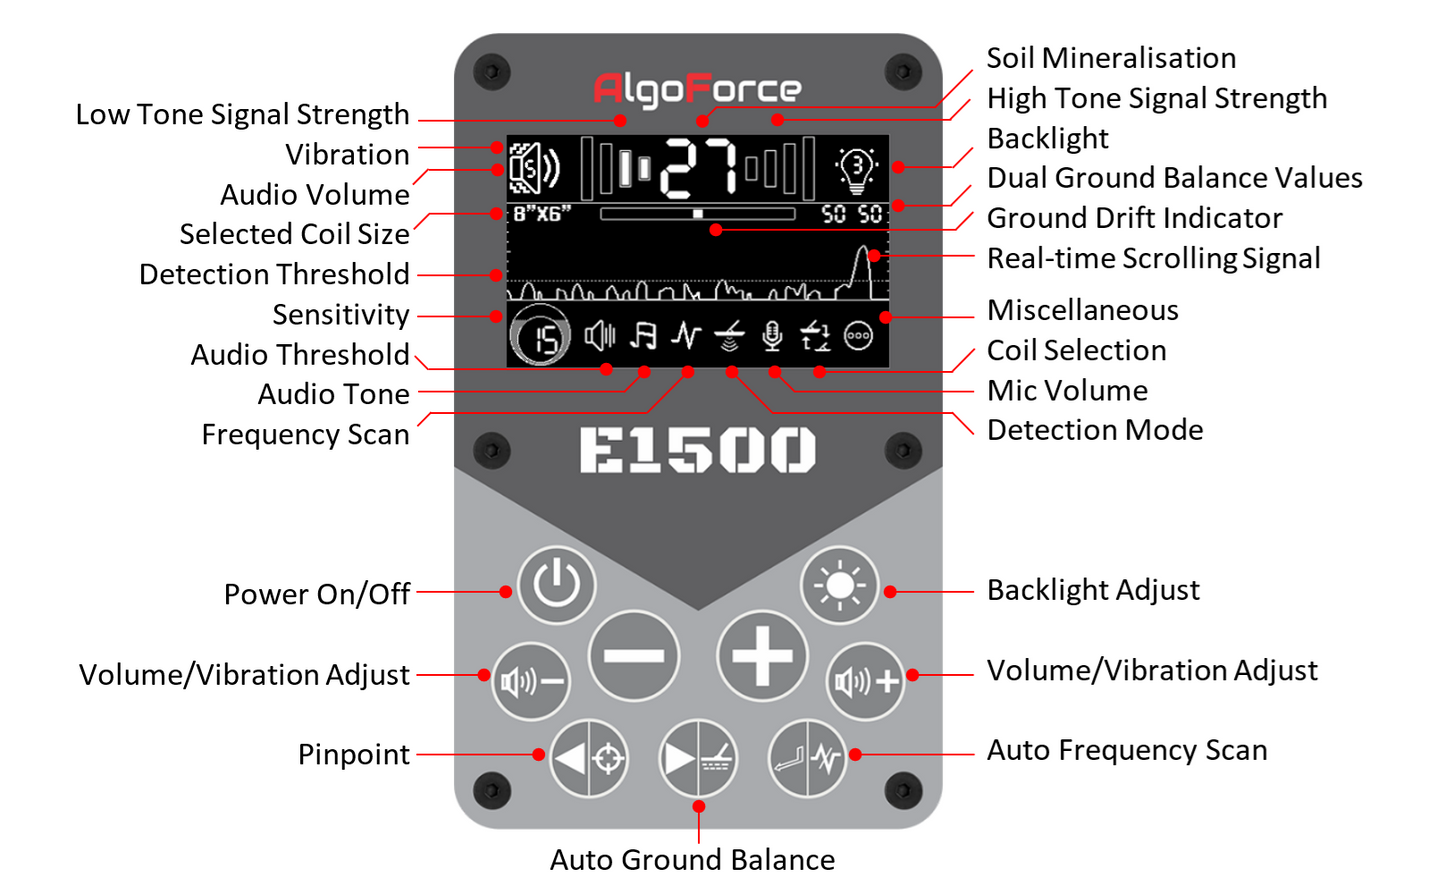 AlgoForce E1500 BASIC Package